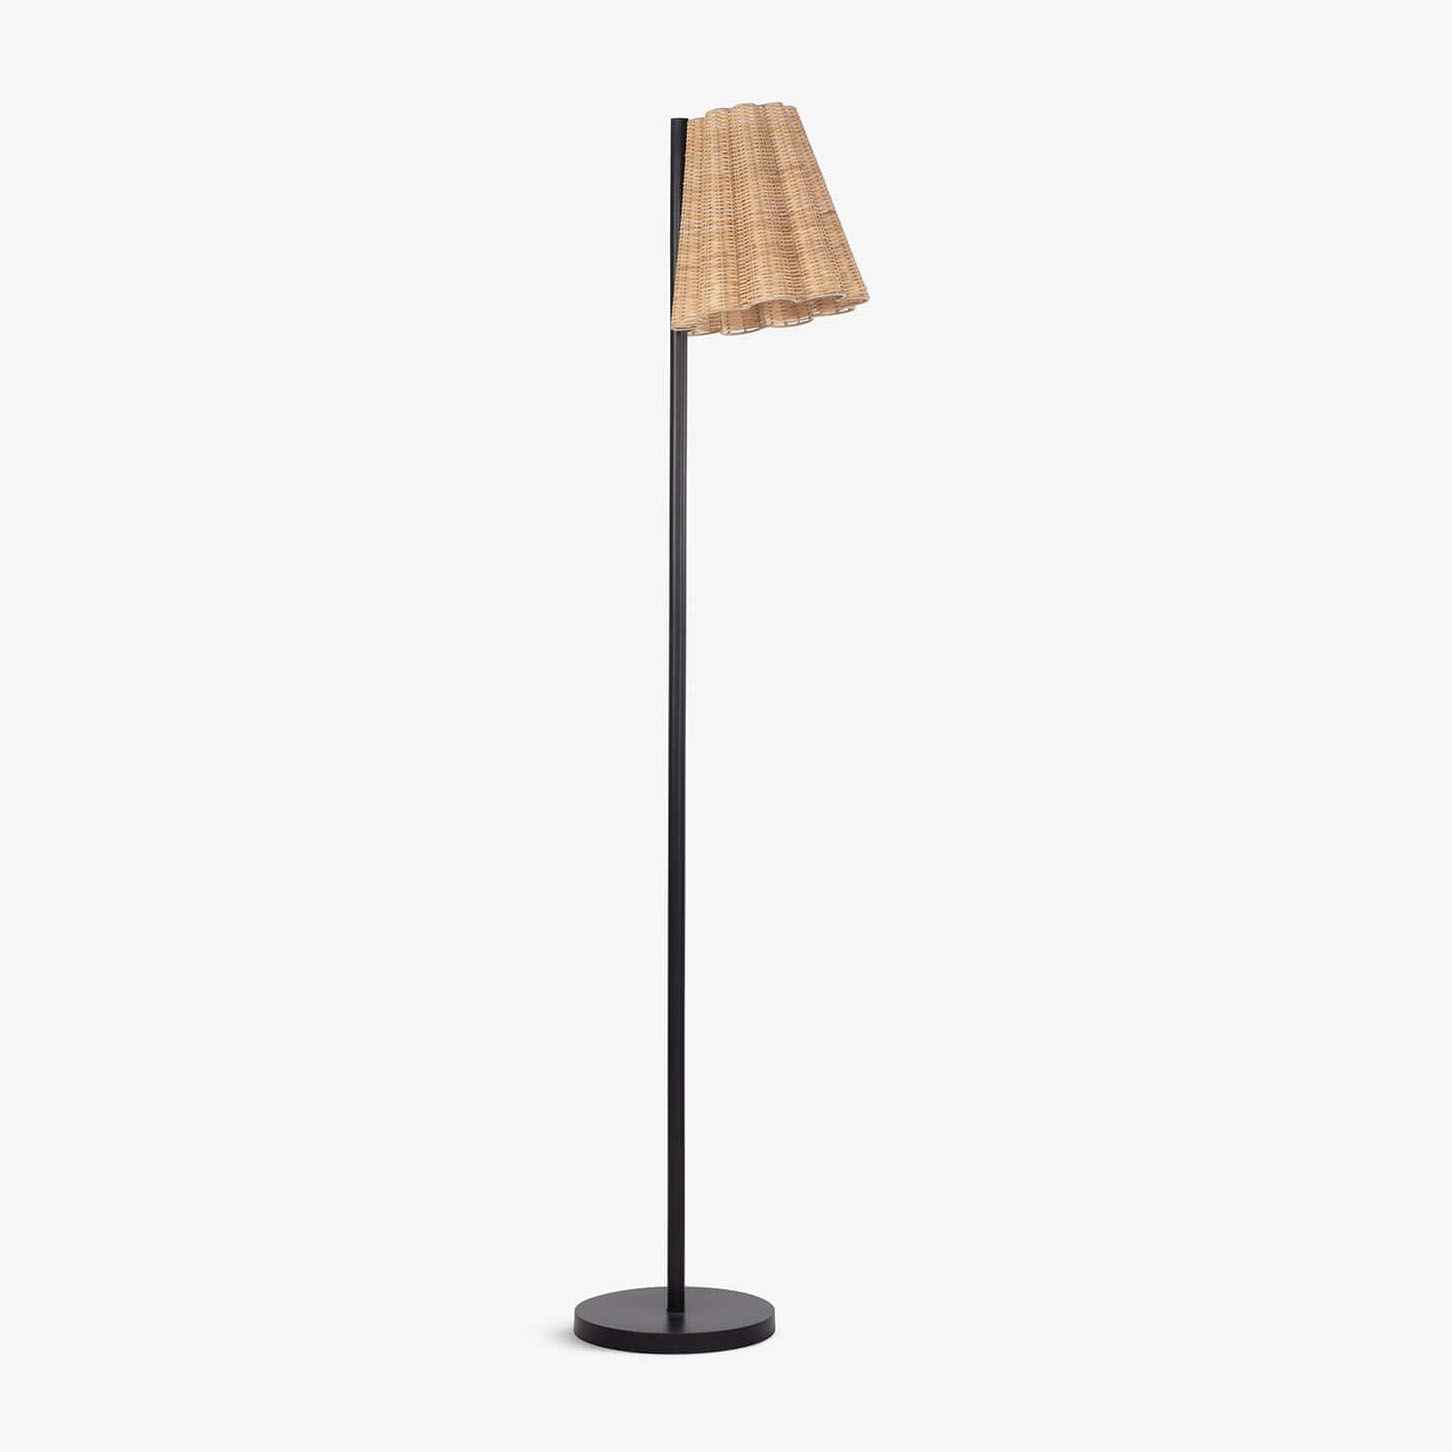 Punkhe Conical Floor Lamp